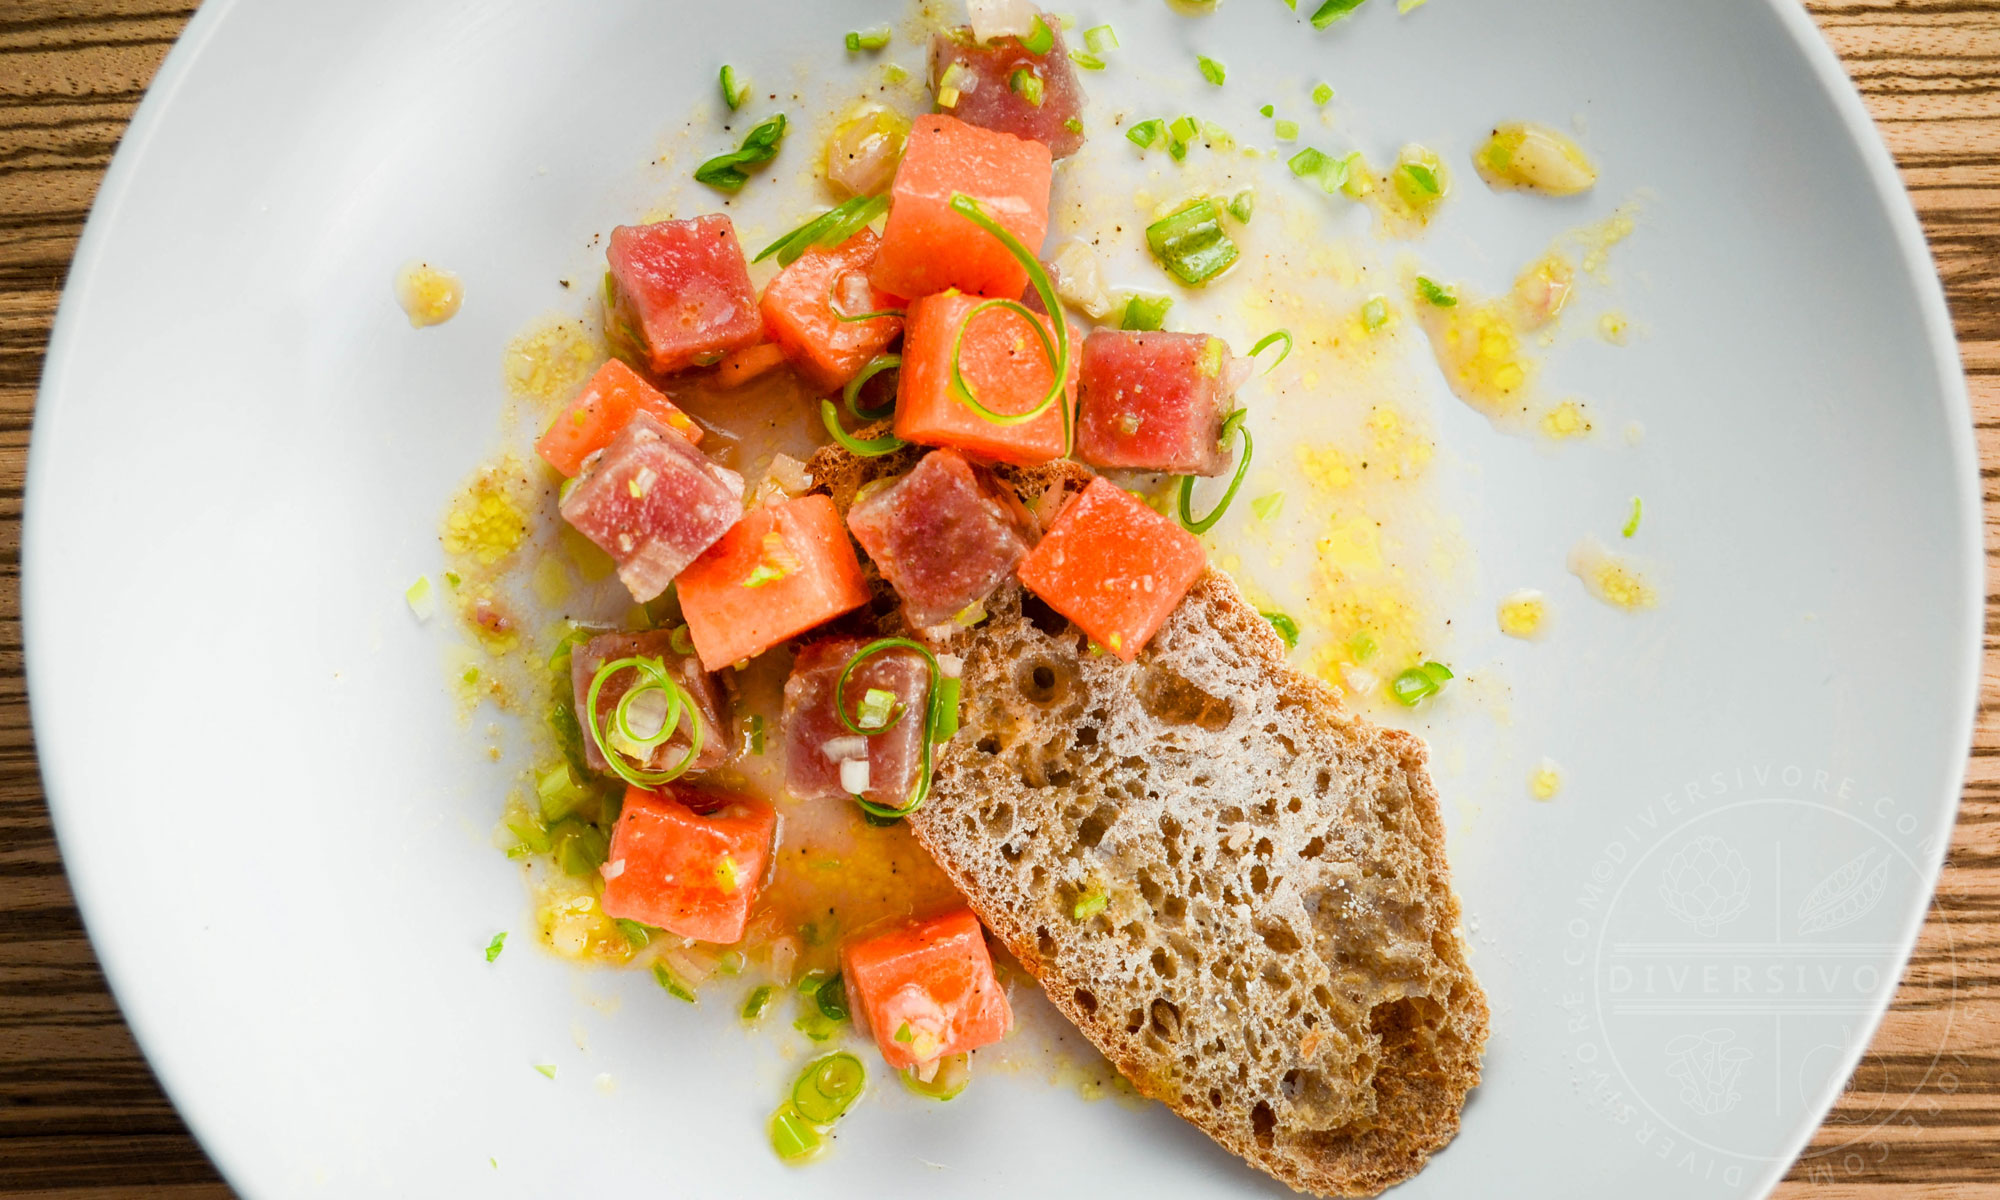 Featured image for “Watermelon and Tuna Crudo”